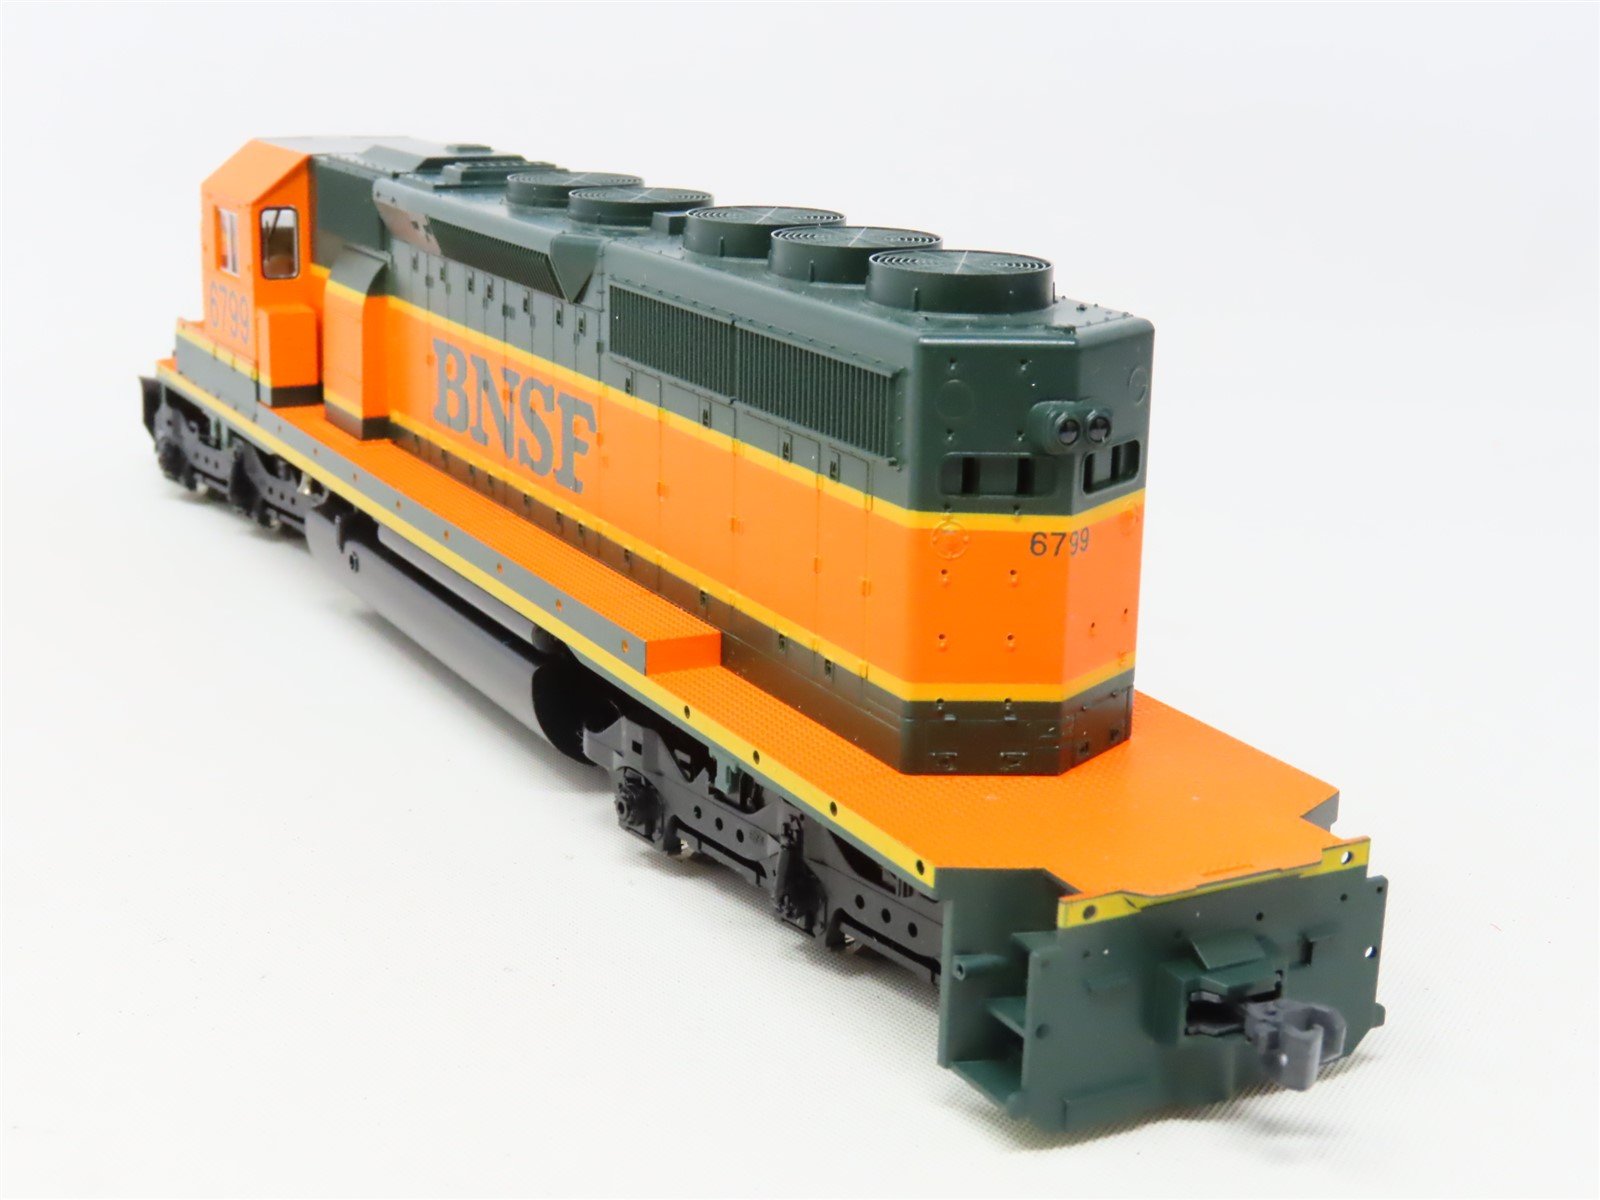 HO KATO 37-2907 BNSF Railway EMD SD40-2 Snoot Nose Diesel #6799 